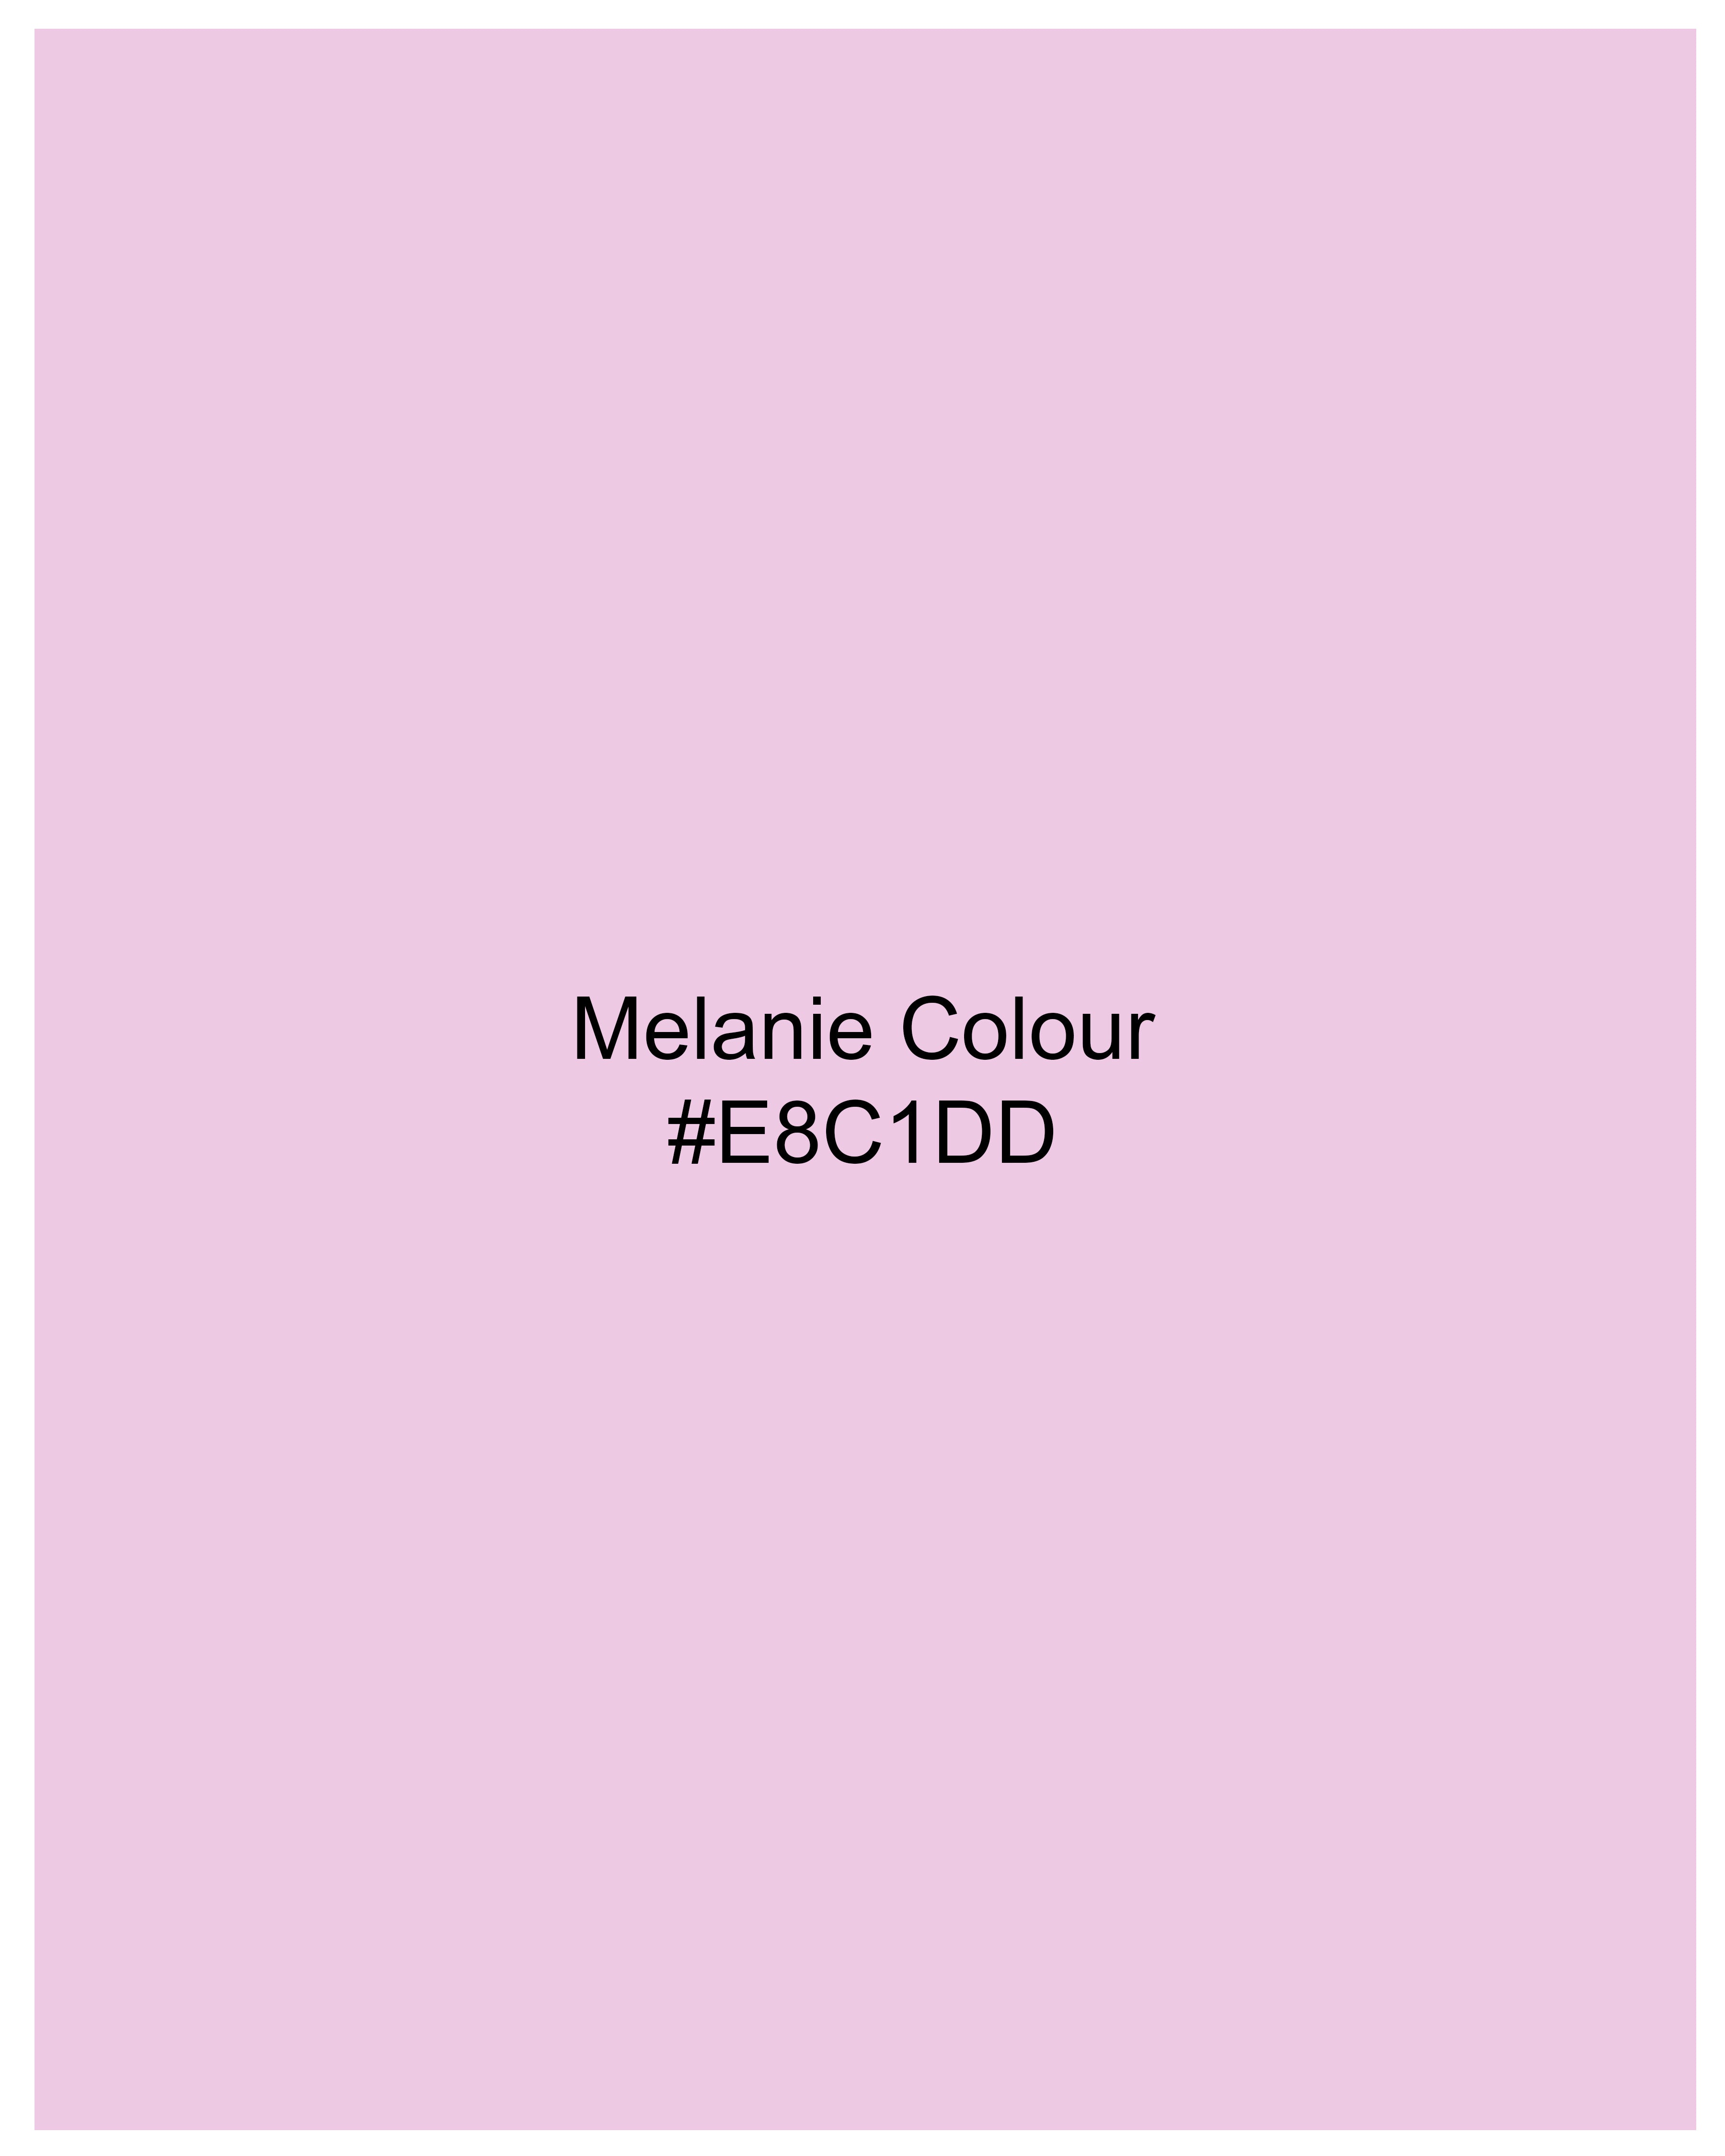 Melanie Pink Premium Cotton Shirt 9753-CA-P444-38, 9753-CA-P444-H-38, 9753-CA-P444-39, 9753-CA-P444-H-39, 9753-CA-P444-40, 9753-CA-P444-H-40, 9753-CA-P444-42, 9753-CA-P444-H-42, 9753-CA-P444-44, 9753-CA-P444-H-44, 9753-CA-P444-46, 9753-CA-P444-H-46, 9753-CA-P444-48, 9753-CA-P444-H-48, 9753-CA-P444-50, 9753-CA-P444-H-50, 9753-CA-P444-52, 9753-CA-P444-H-52